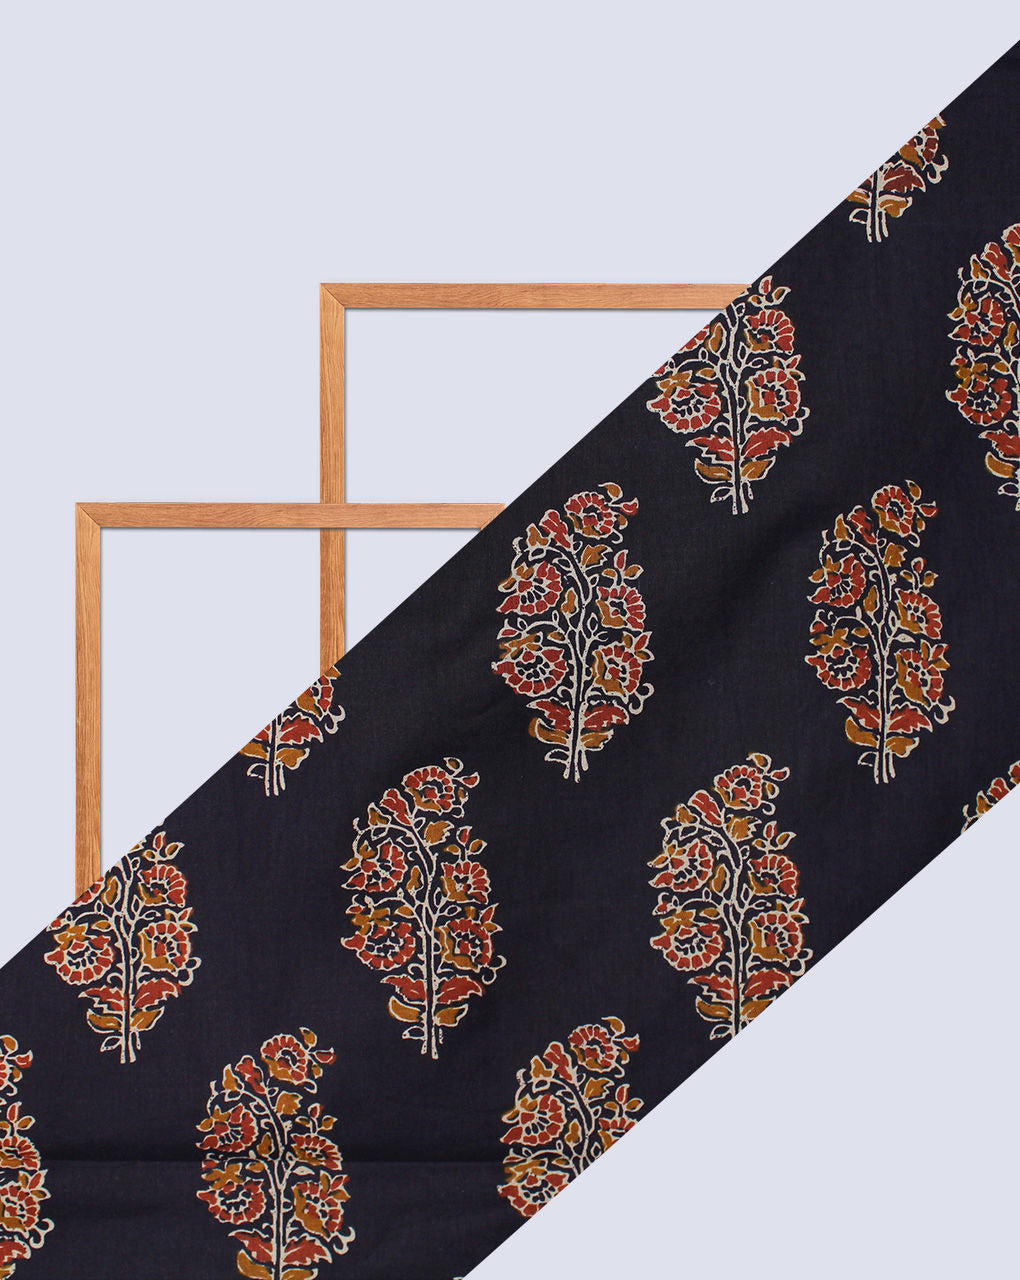 Black Leaf Design Printed Cotton Fabric